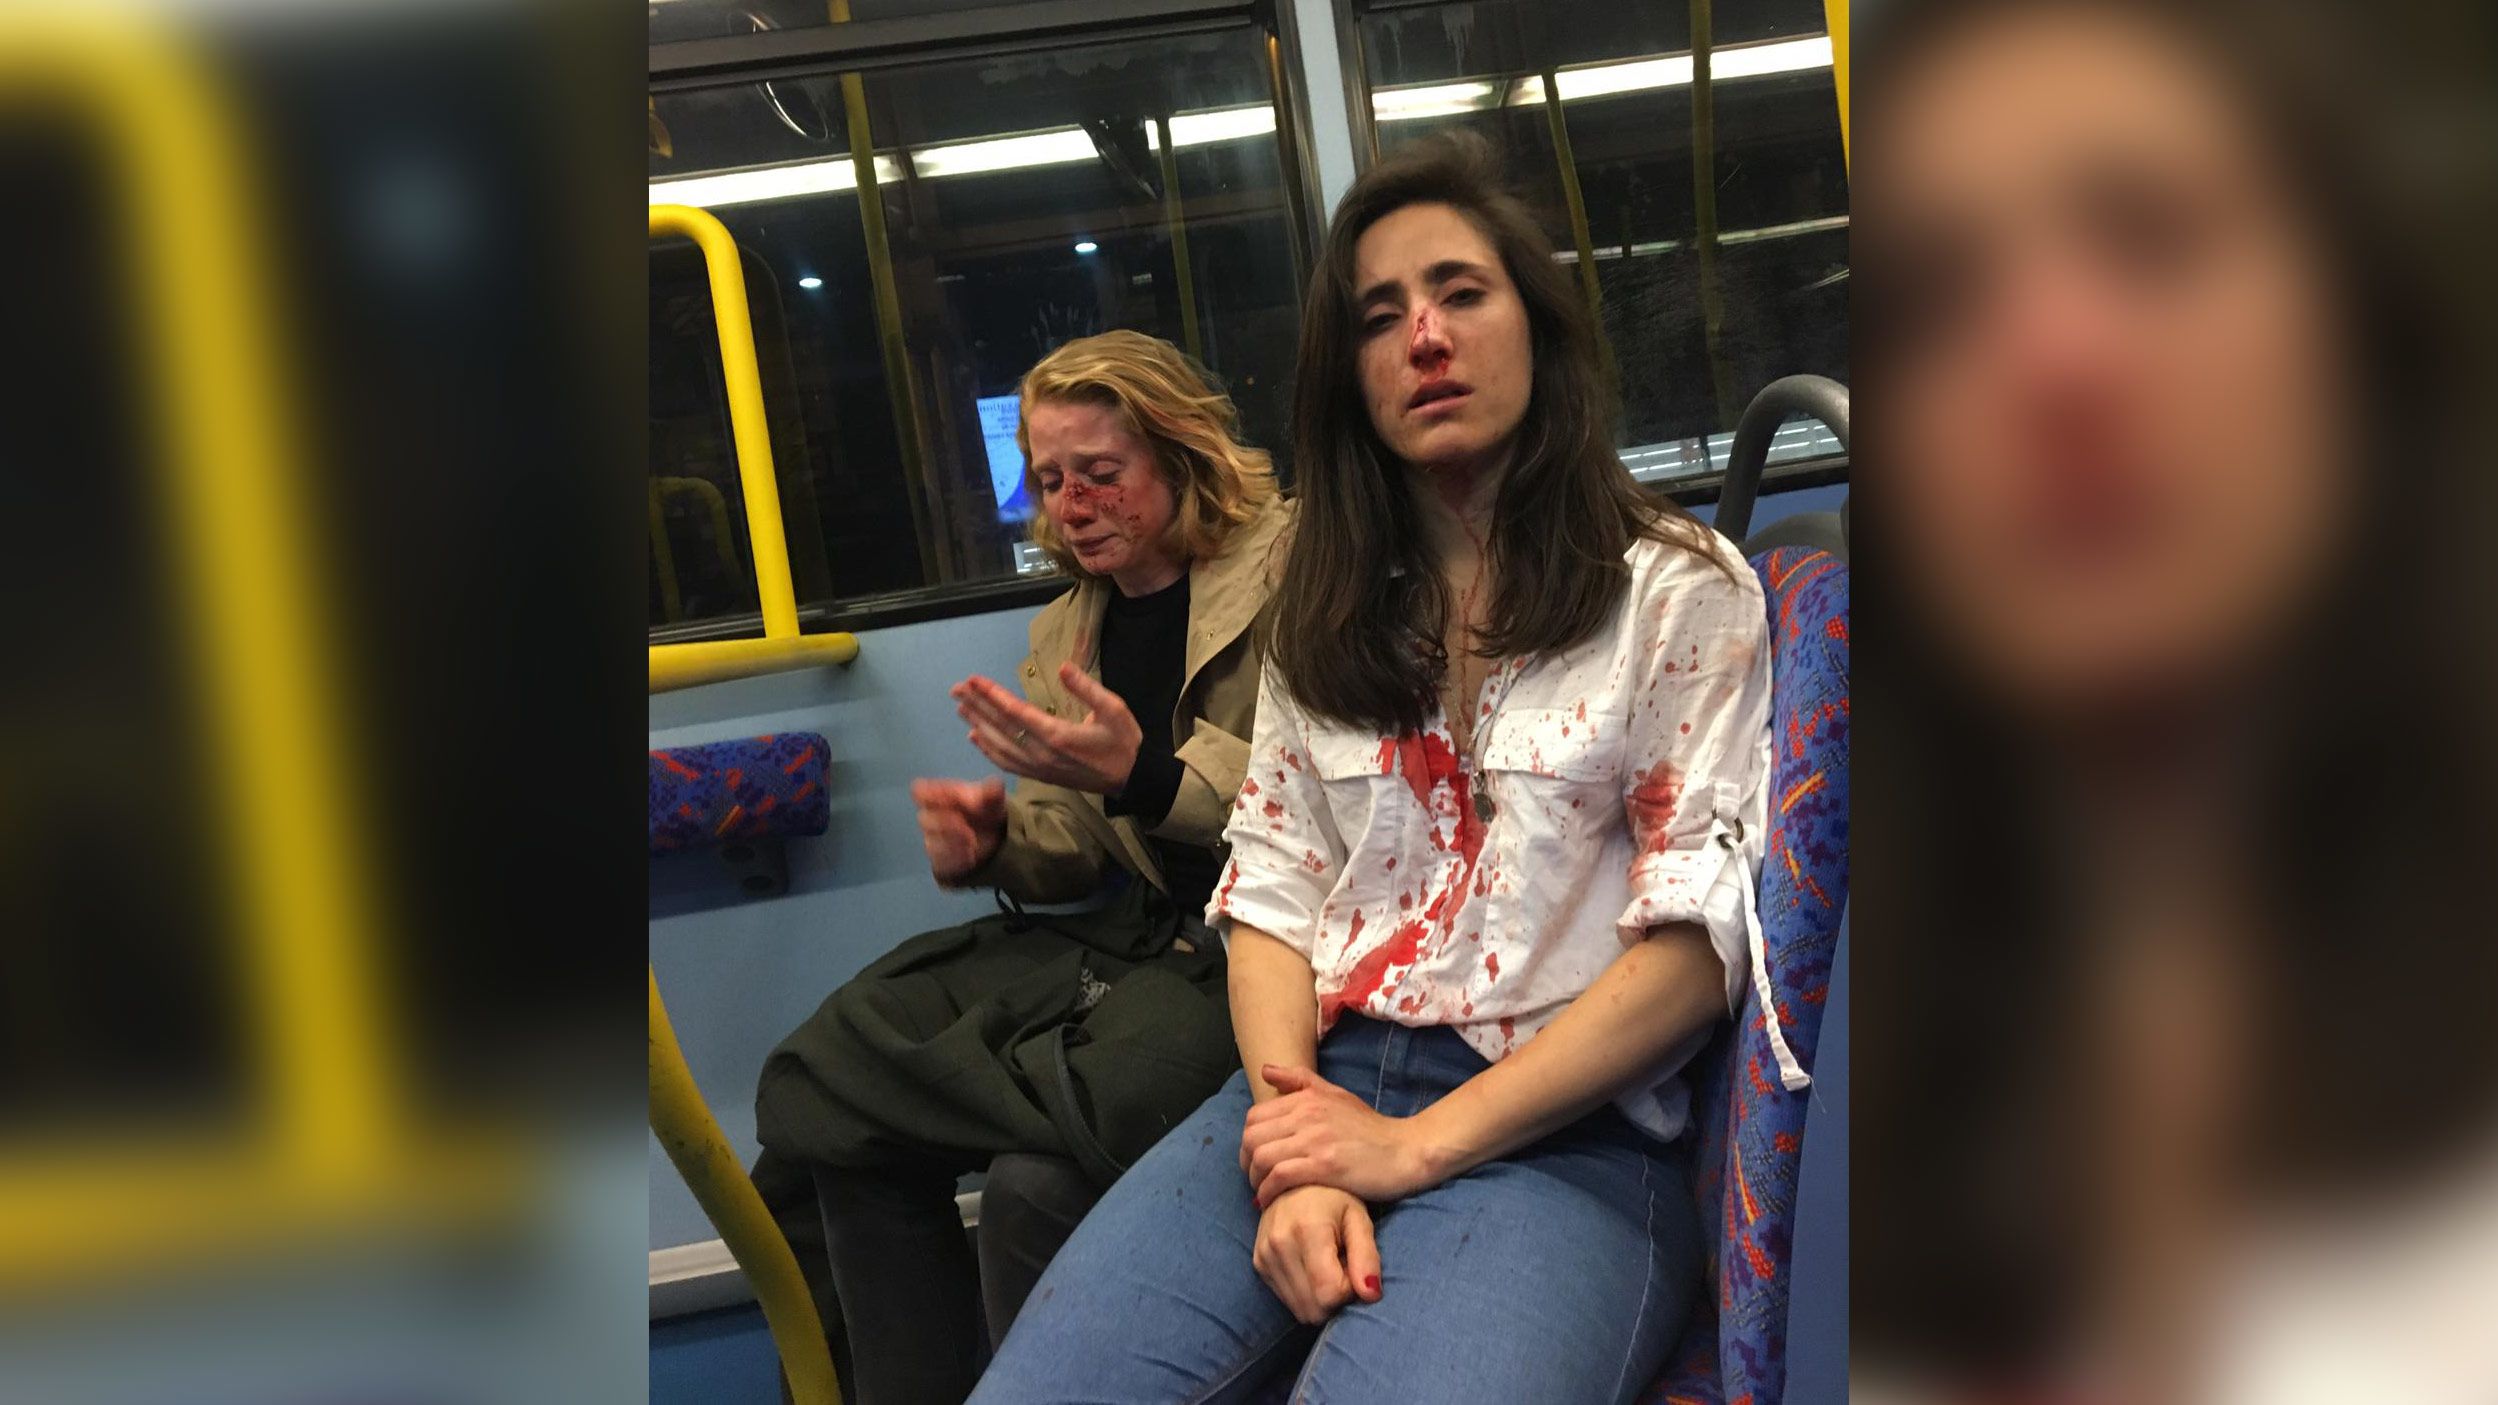 Bus Sleeping Xxx Sex - London bus attack: Lesbian couple viciously beaten in homophobic incident |  CNN